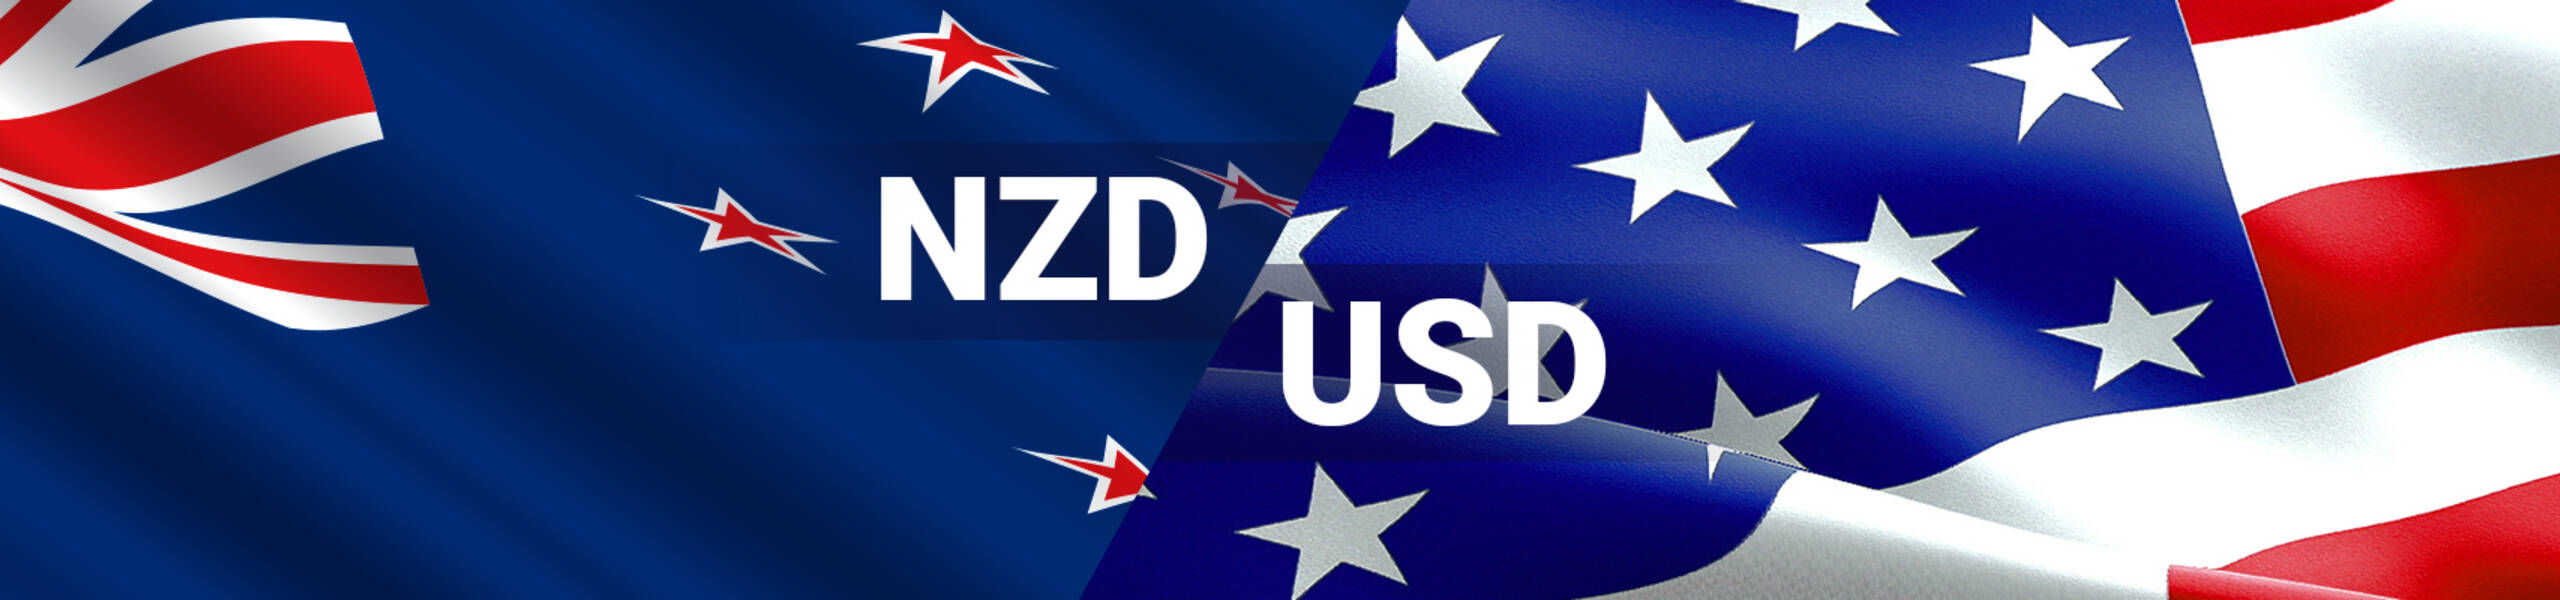 NZD/USD gaining momentum above the 200 SMA